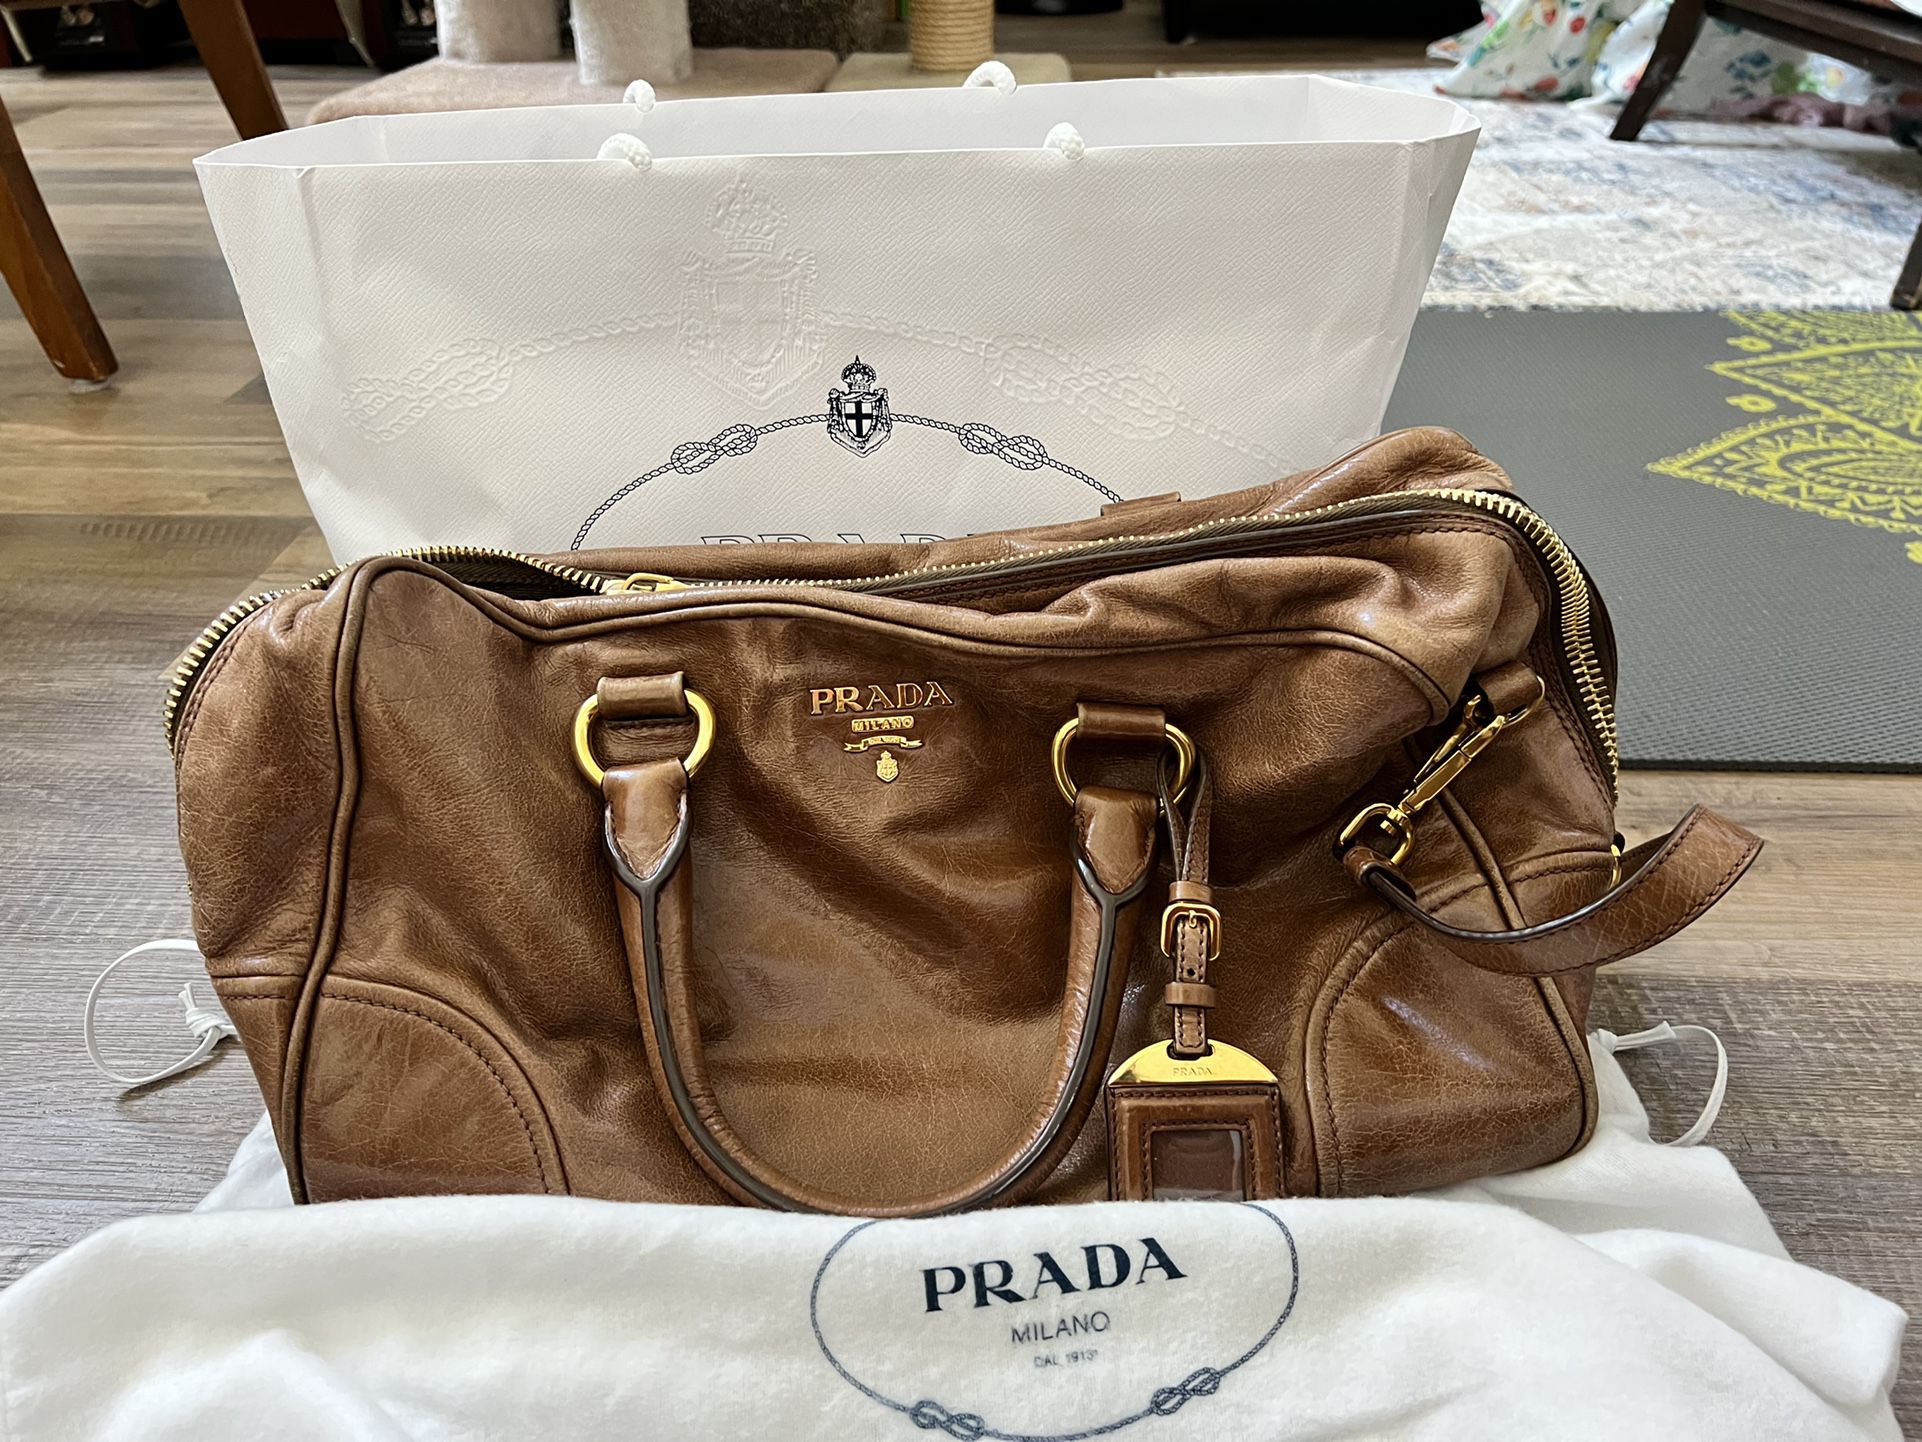 Authentic Prada Leather Handbag In Excellent Condition 